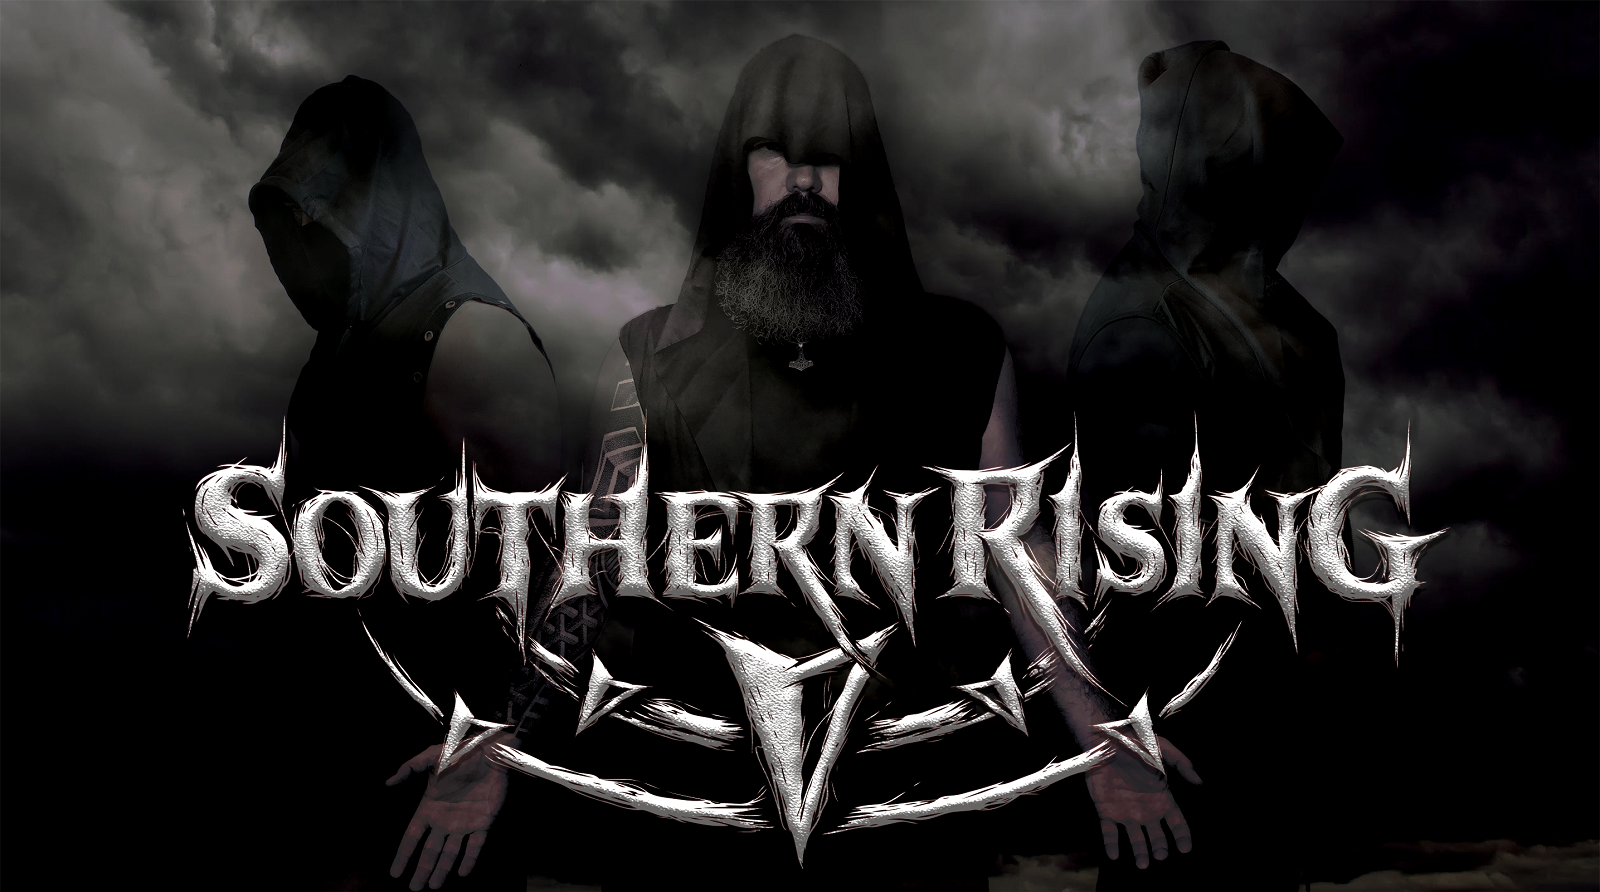 Southern Rising